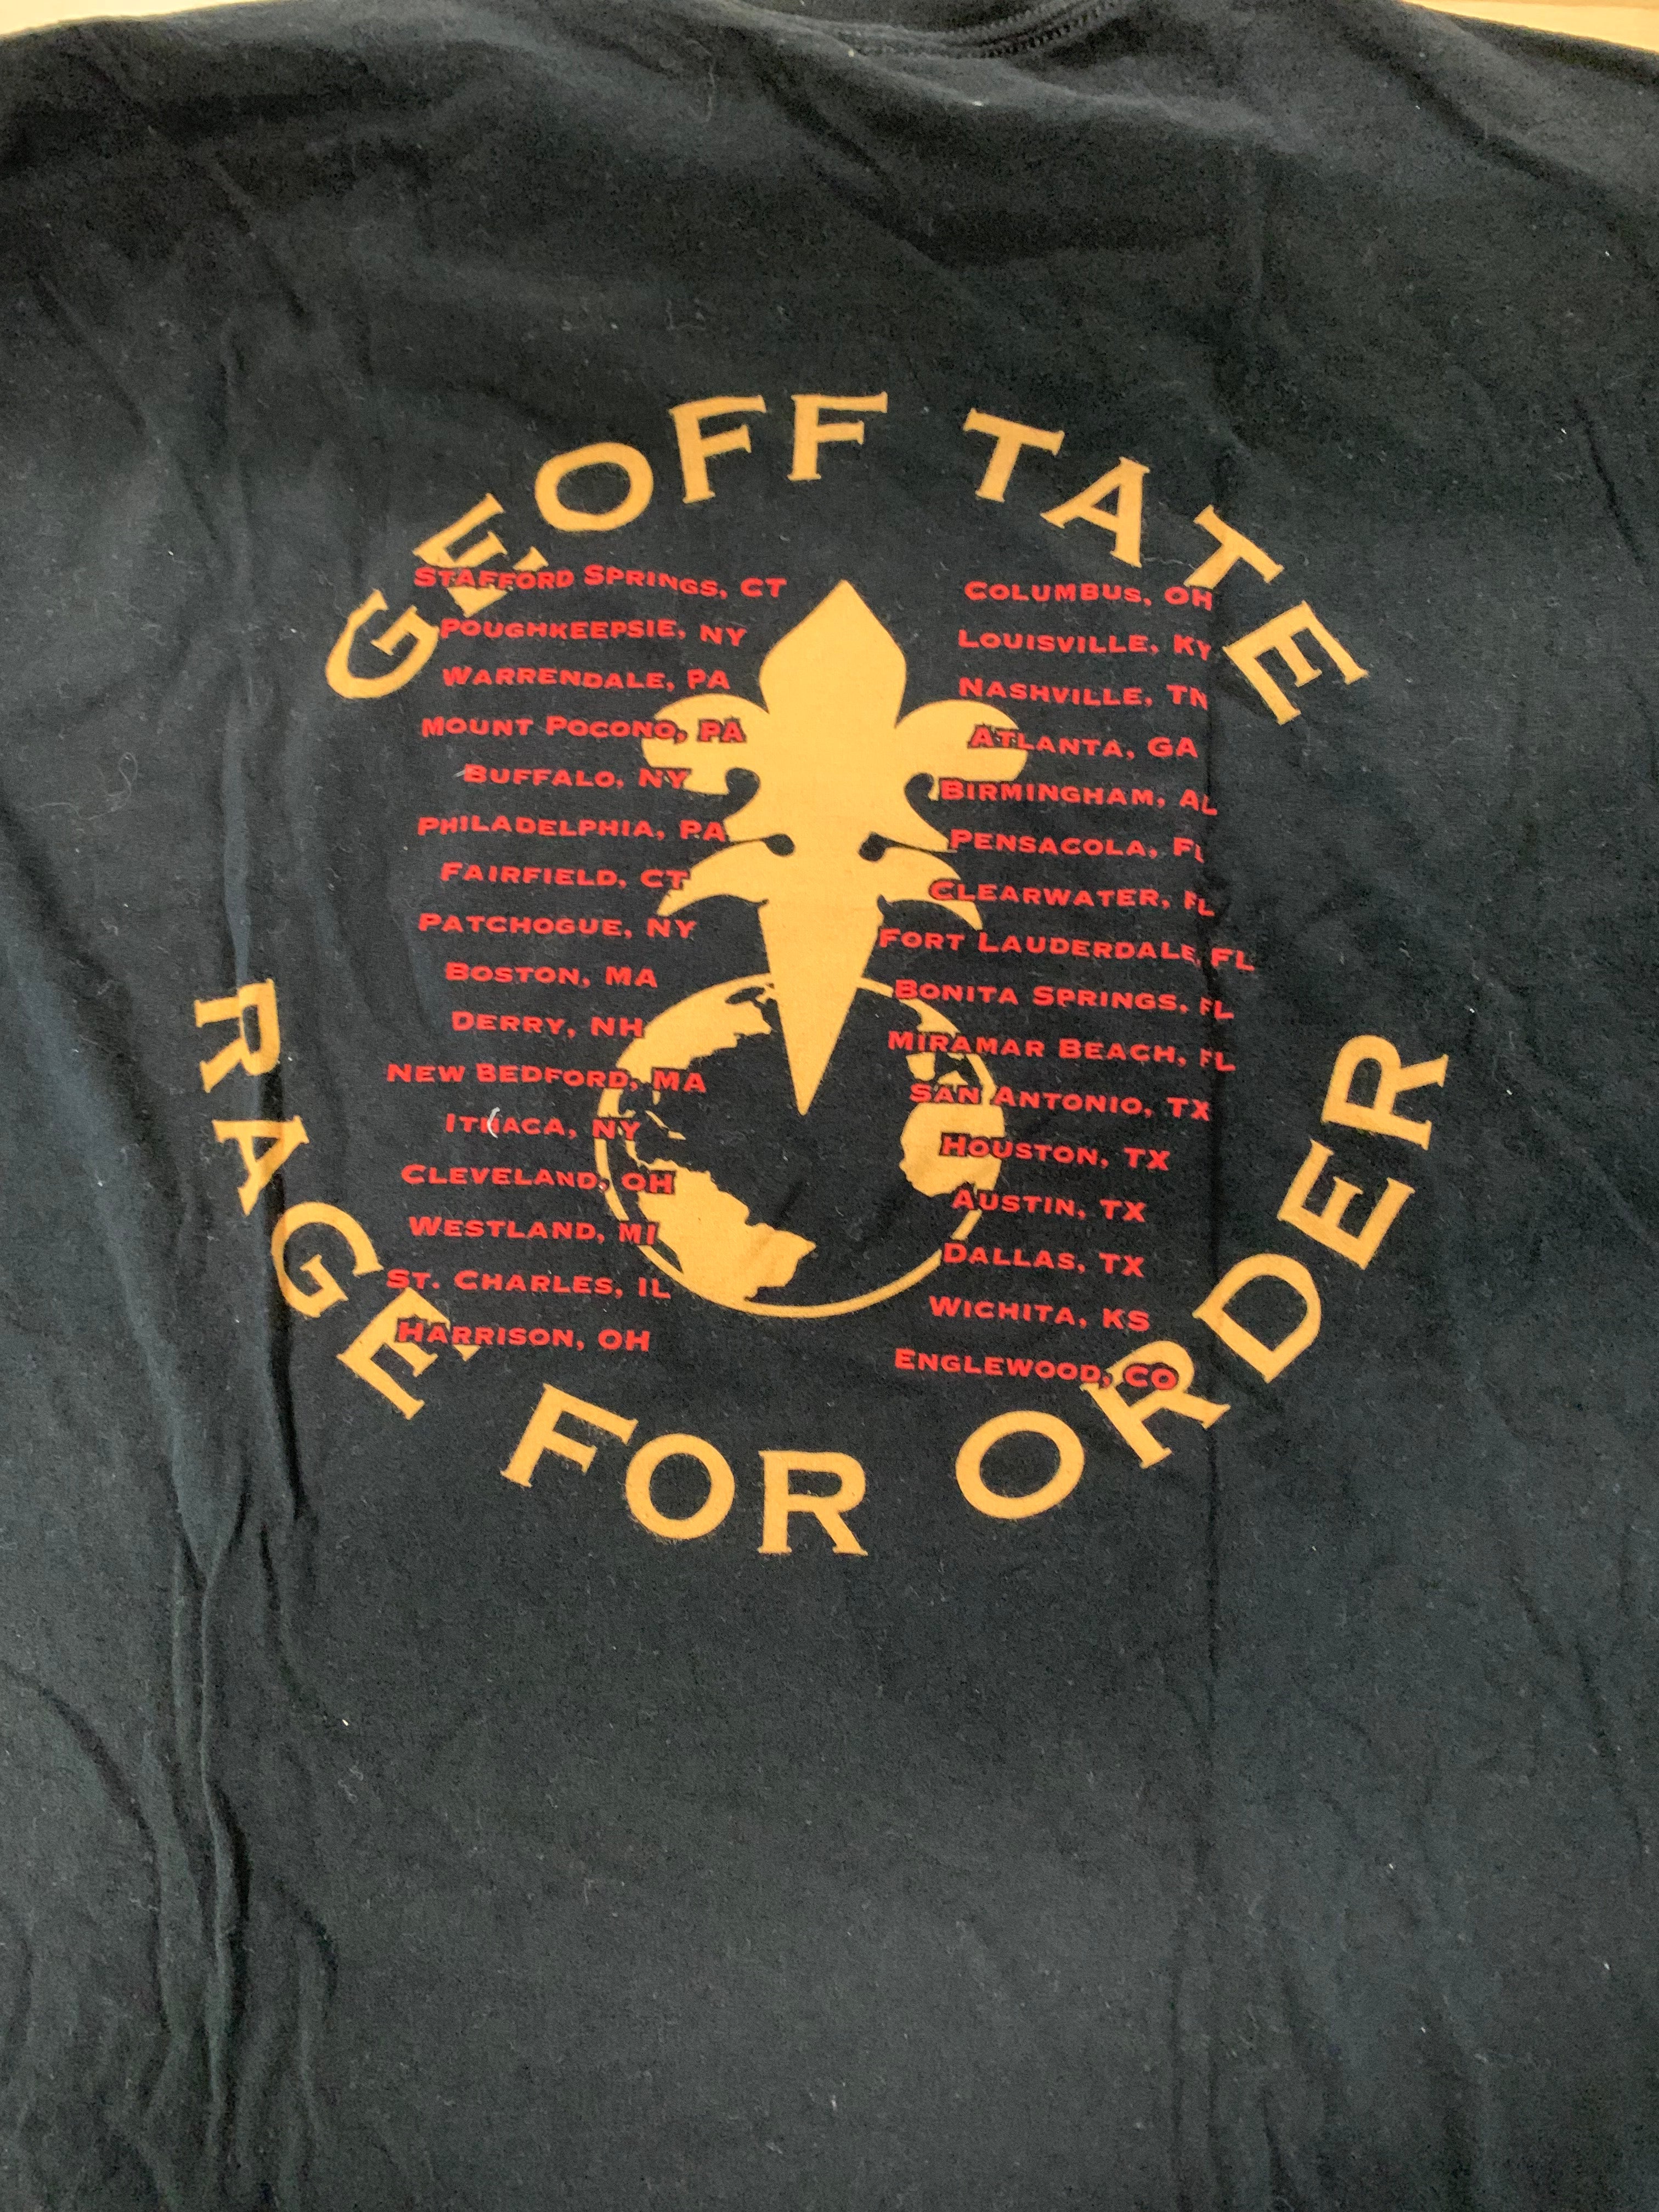 Geoff Tate Rage For Order Tour T-Shirt, Black, XL